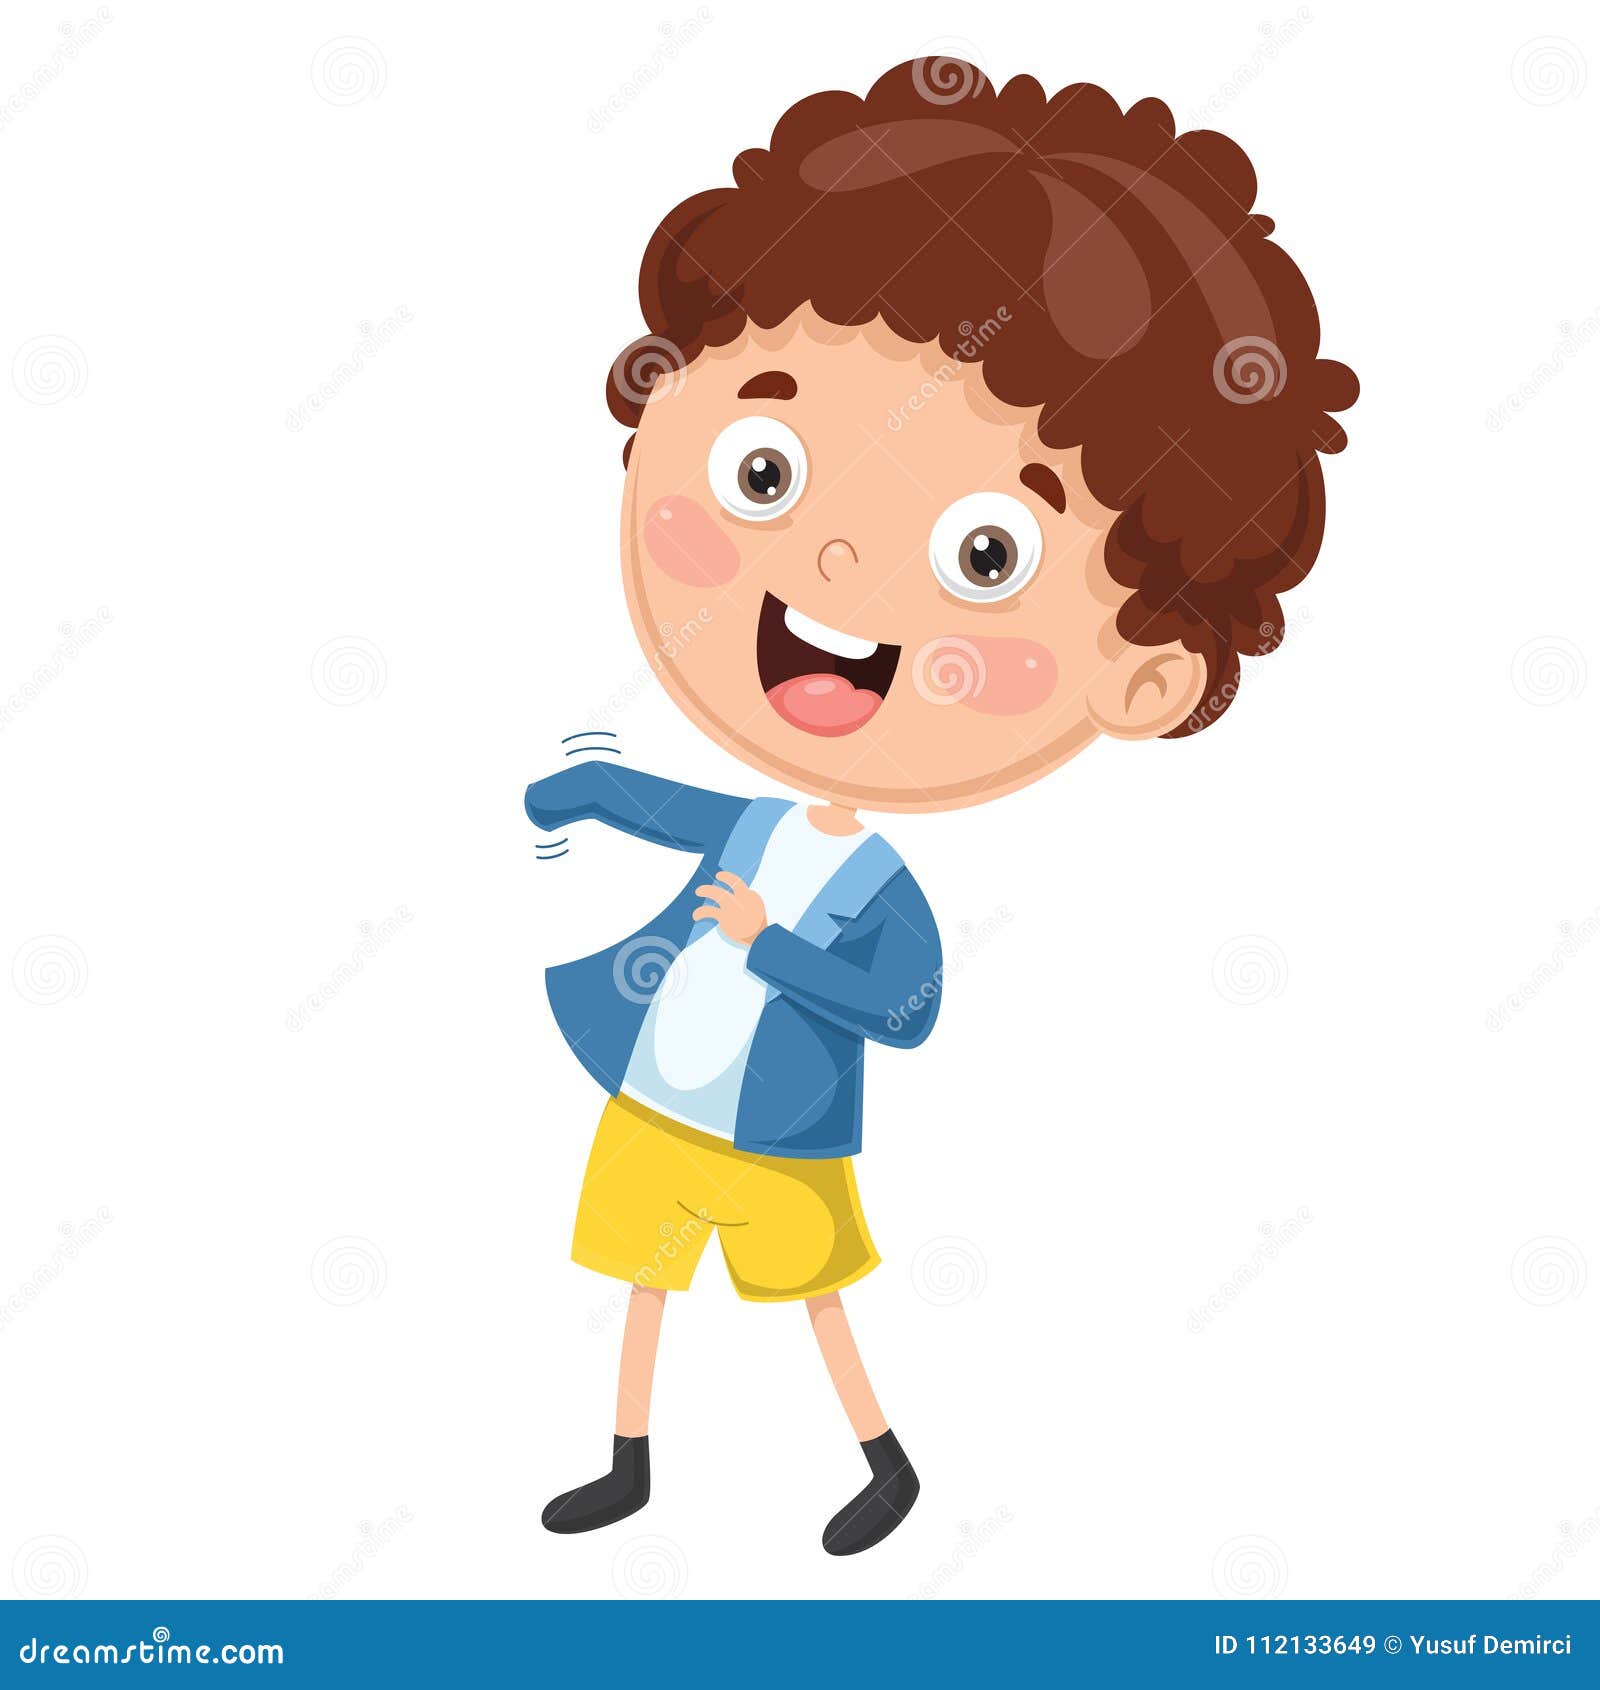 https://thumbs.dreamstime.com/z/vector-illustration-kid-wearing-clothes-eps-112133649.jpg